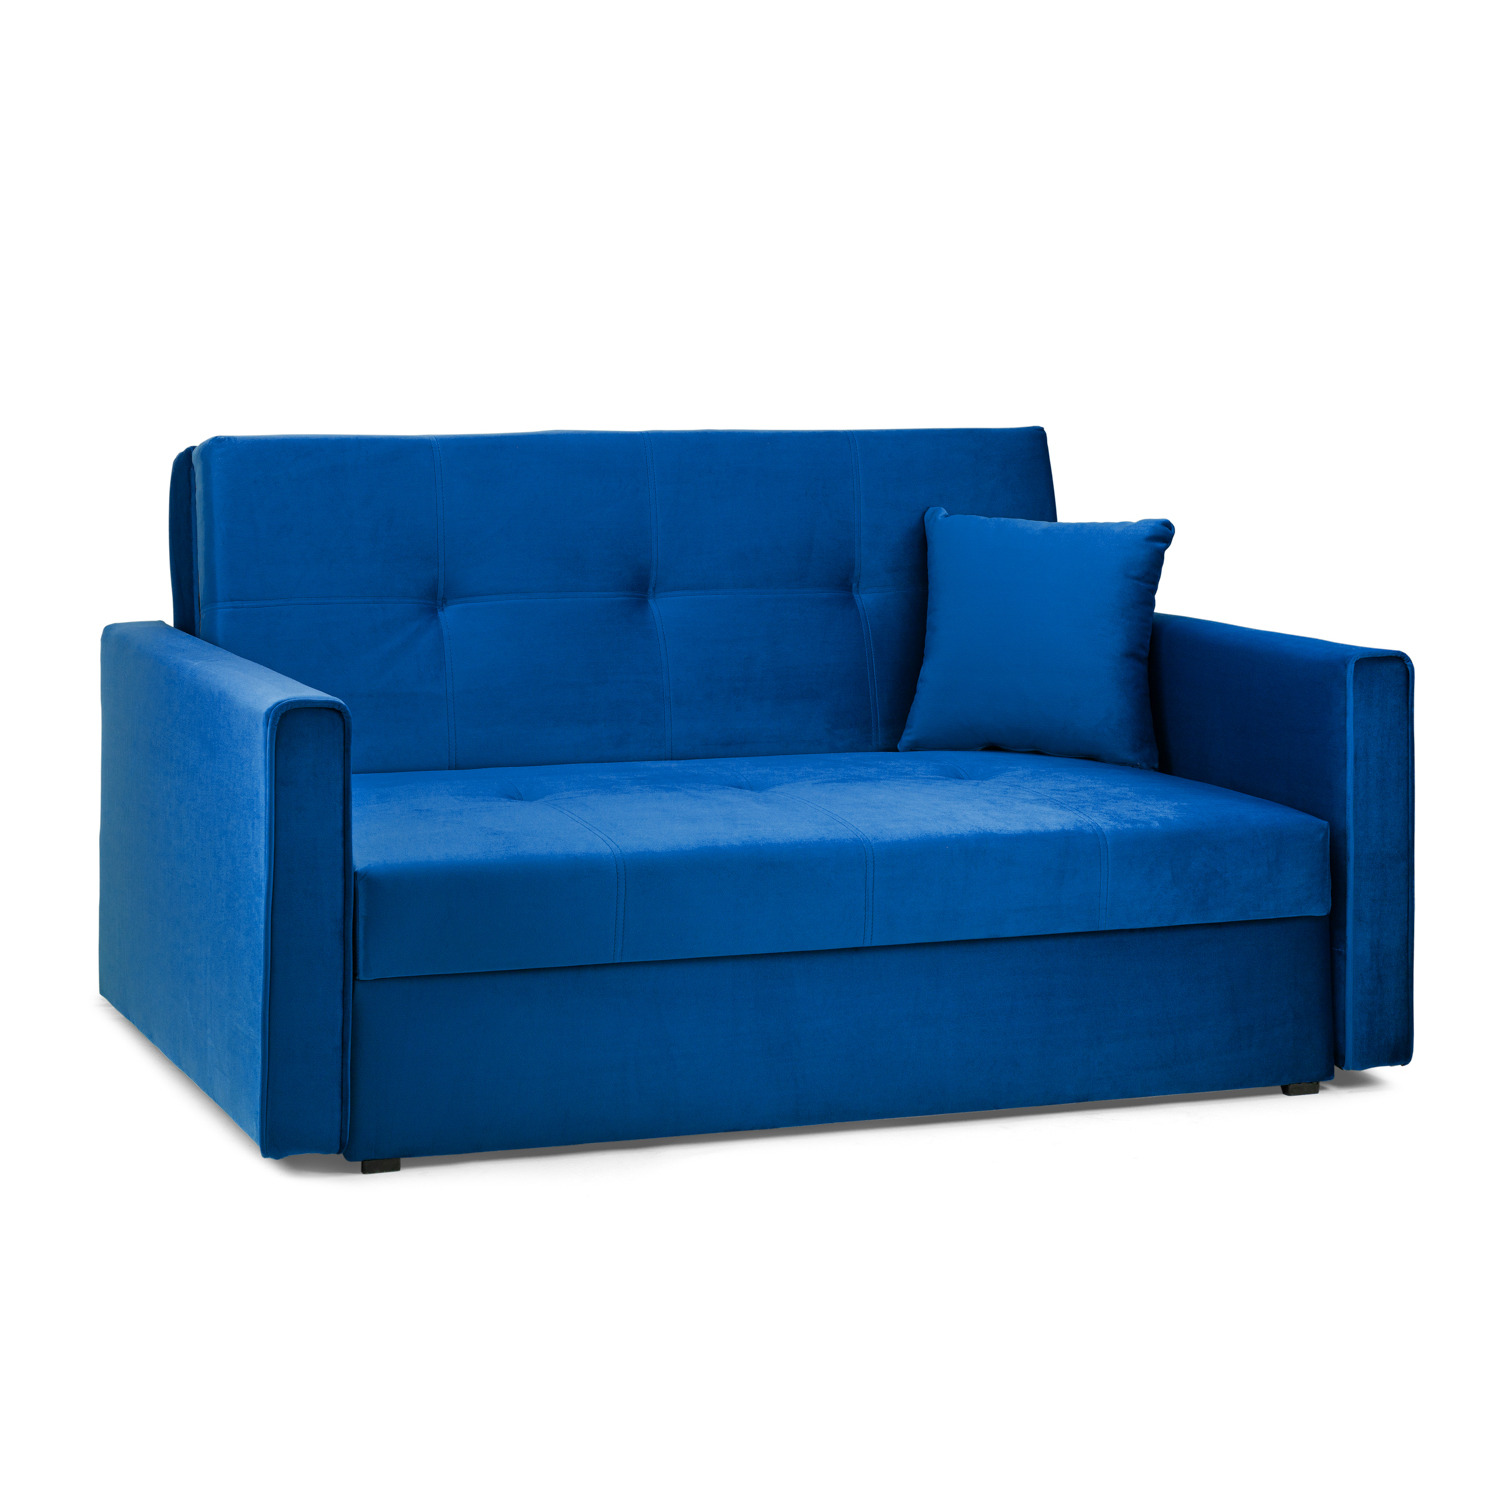 Viva Sofabed Plush Blue 2 Seater - image 1